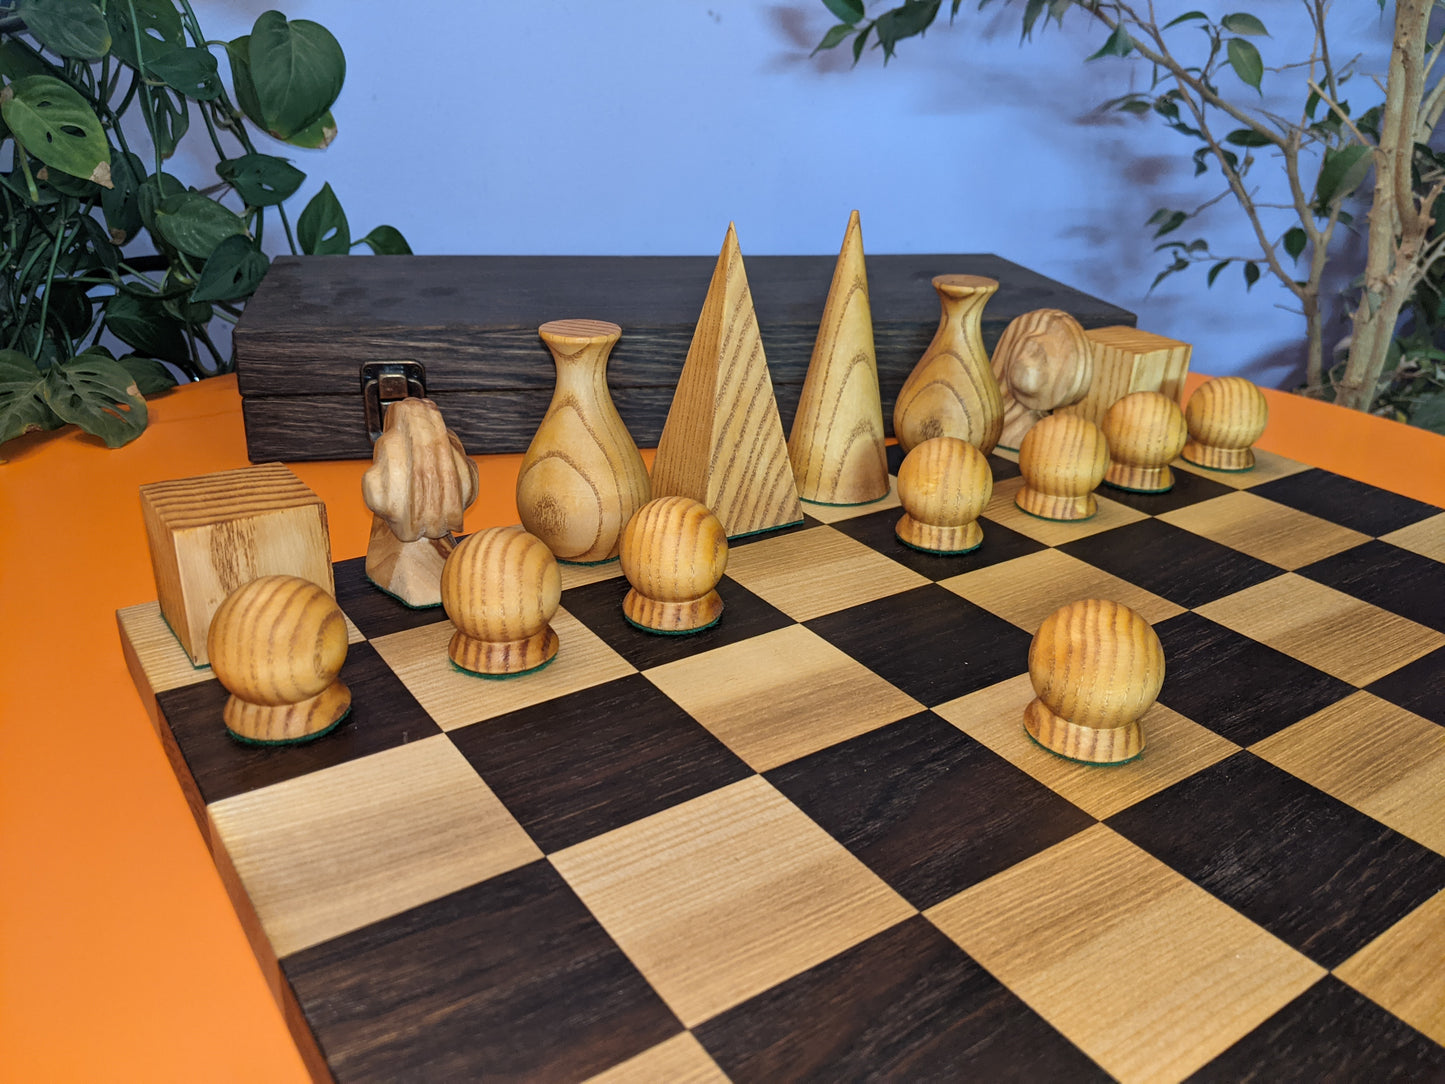 Handmade wood abstract geometric chess set